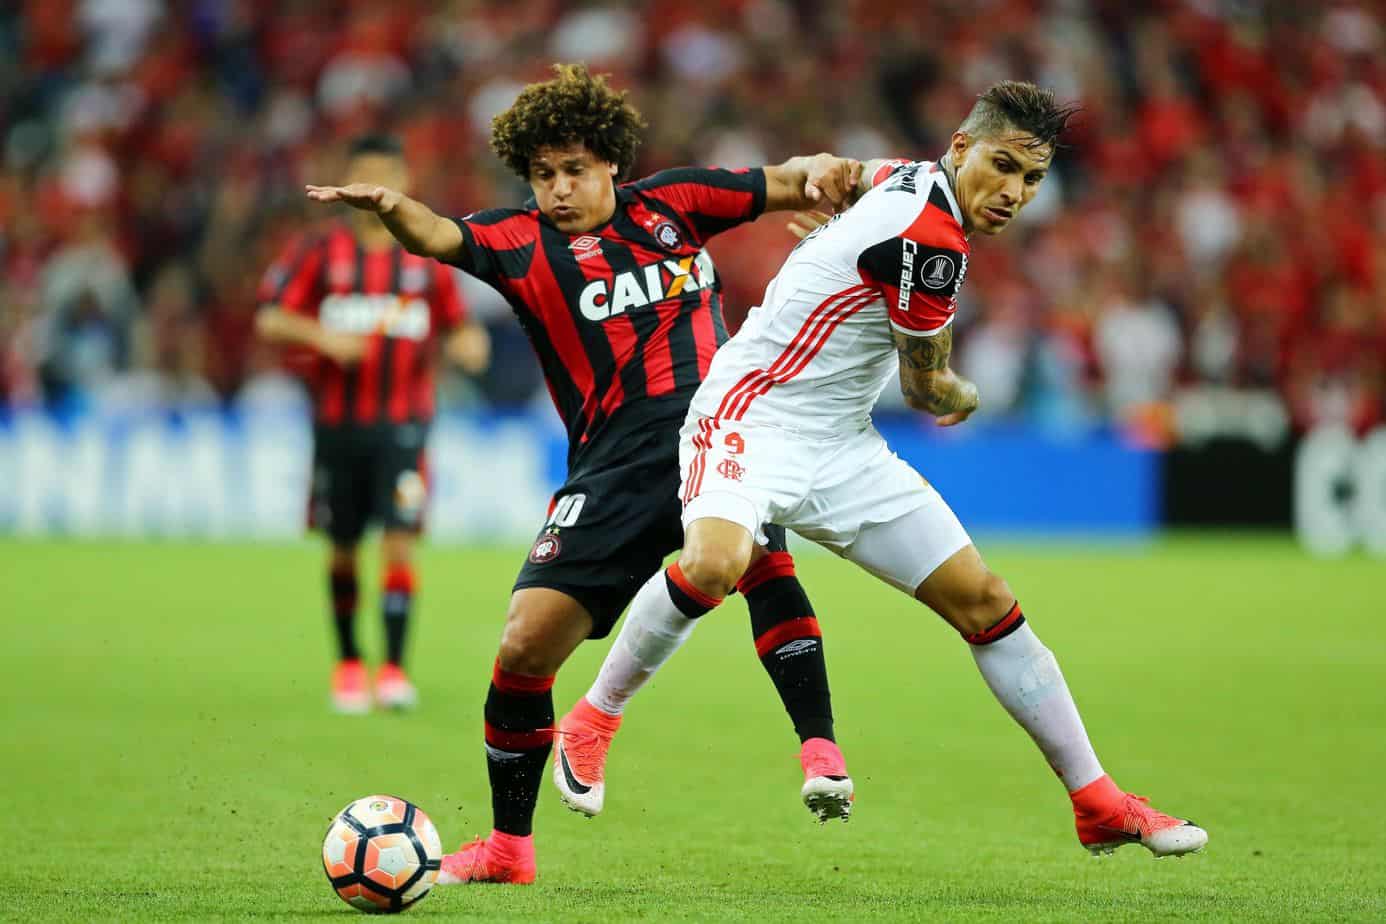 Paranaense vs. Flamengo – Betting Odds and Free Pick